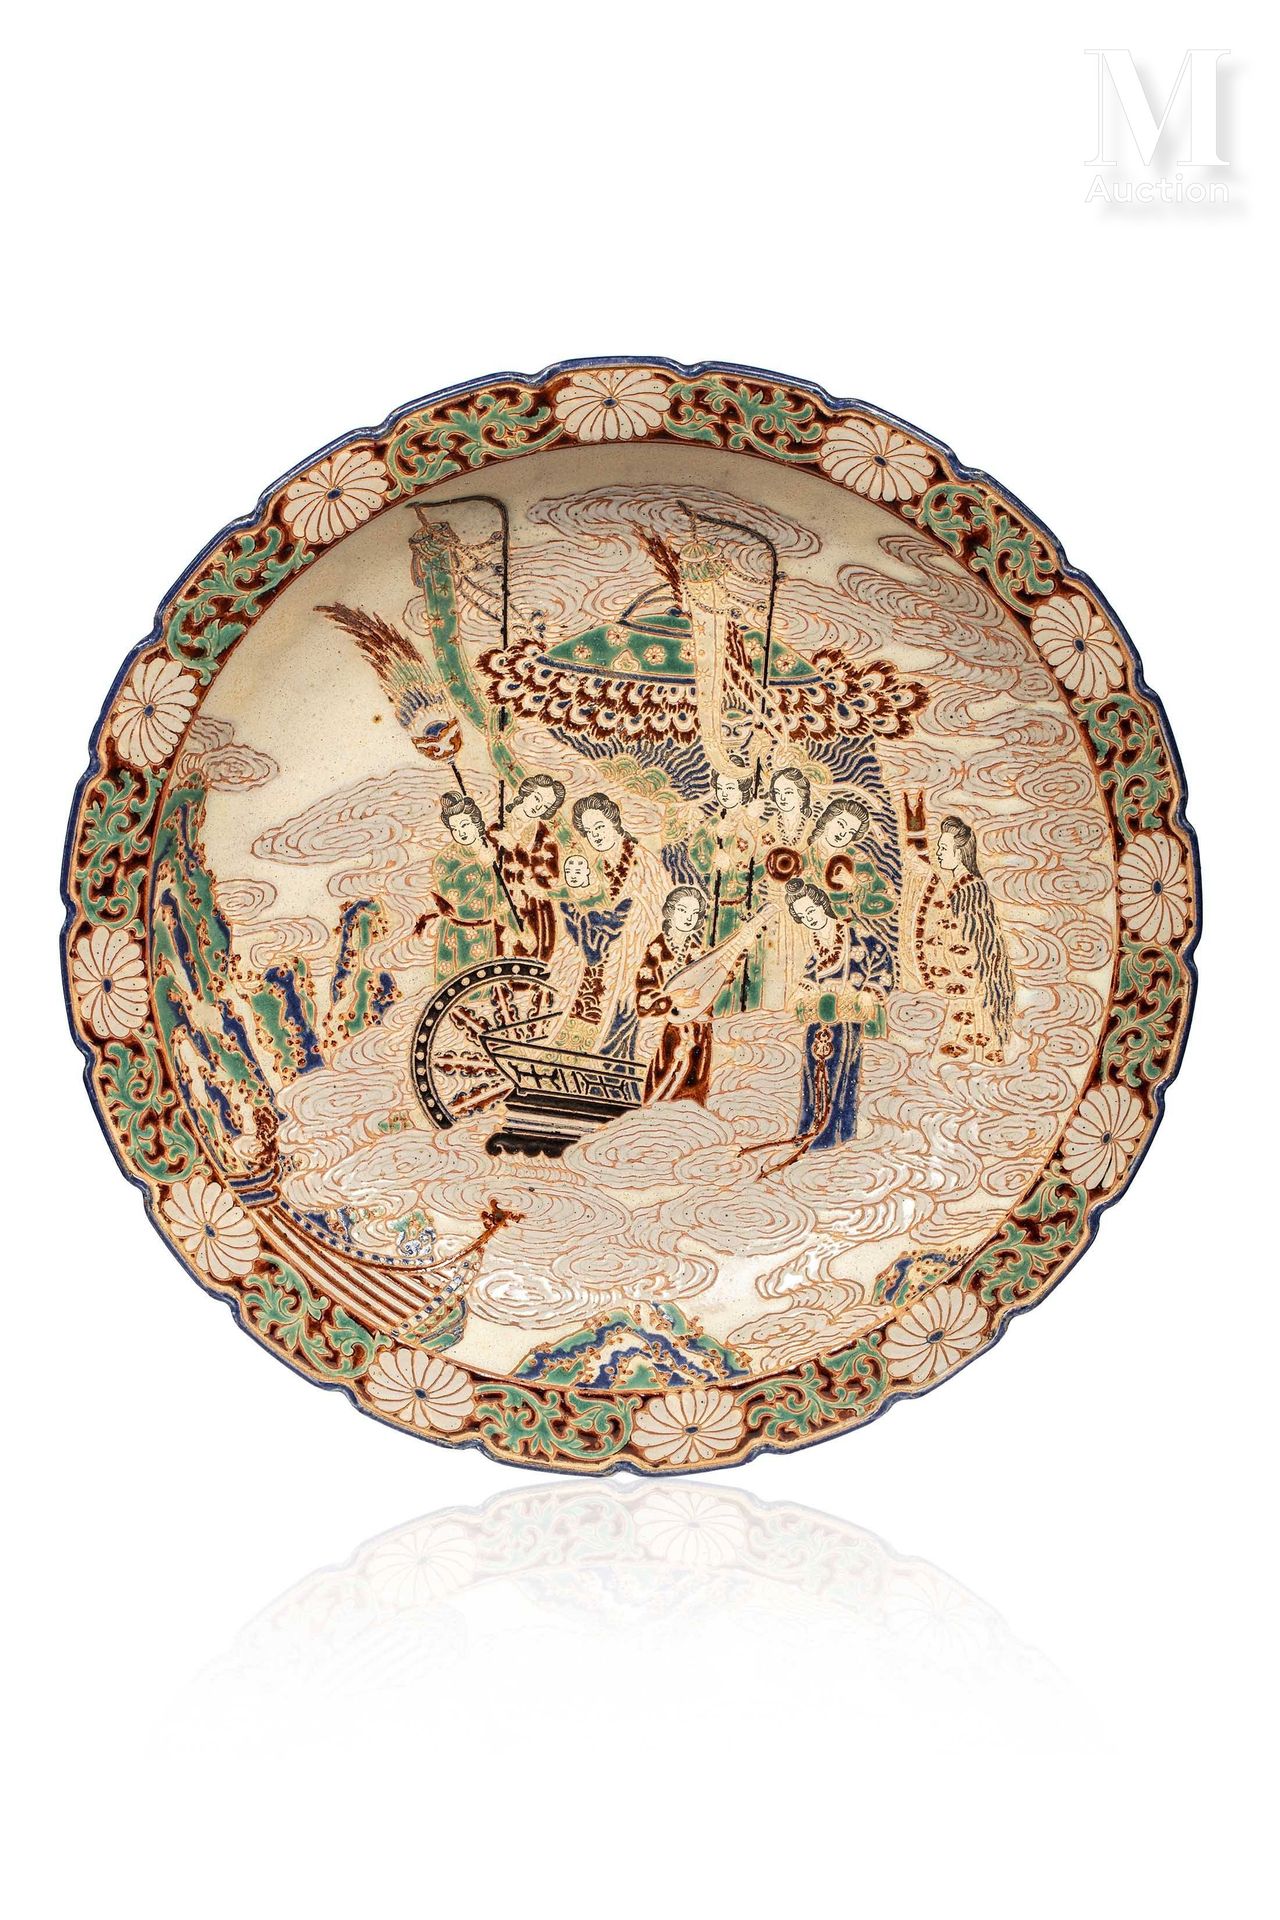 VIETNAM, Ecole de Bien Hoa, XXe siècle, Important plat en céramique 饰以神灵

底座下有边和&hellip;